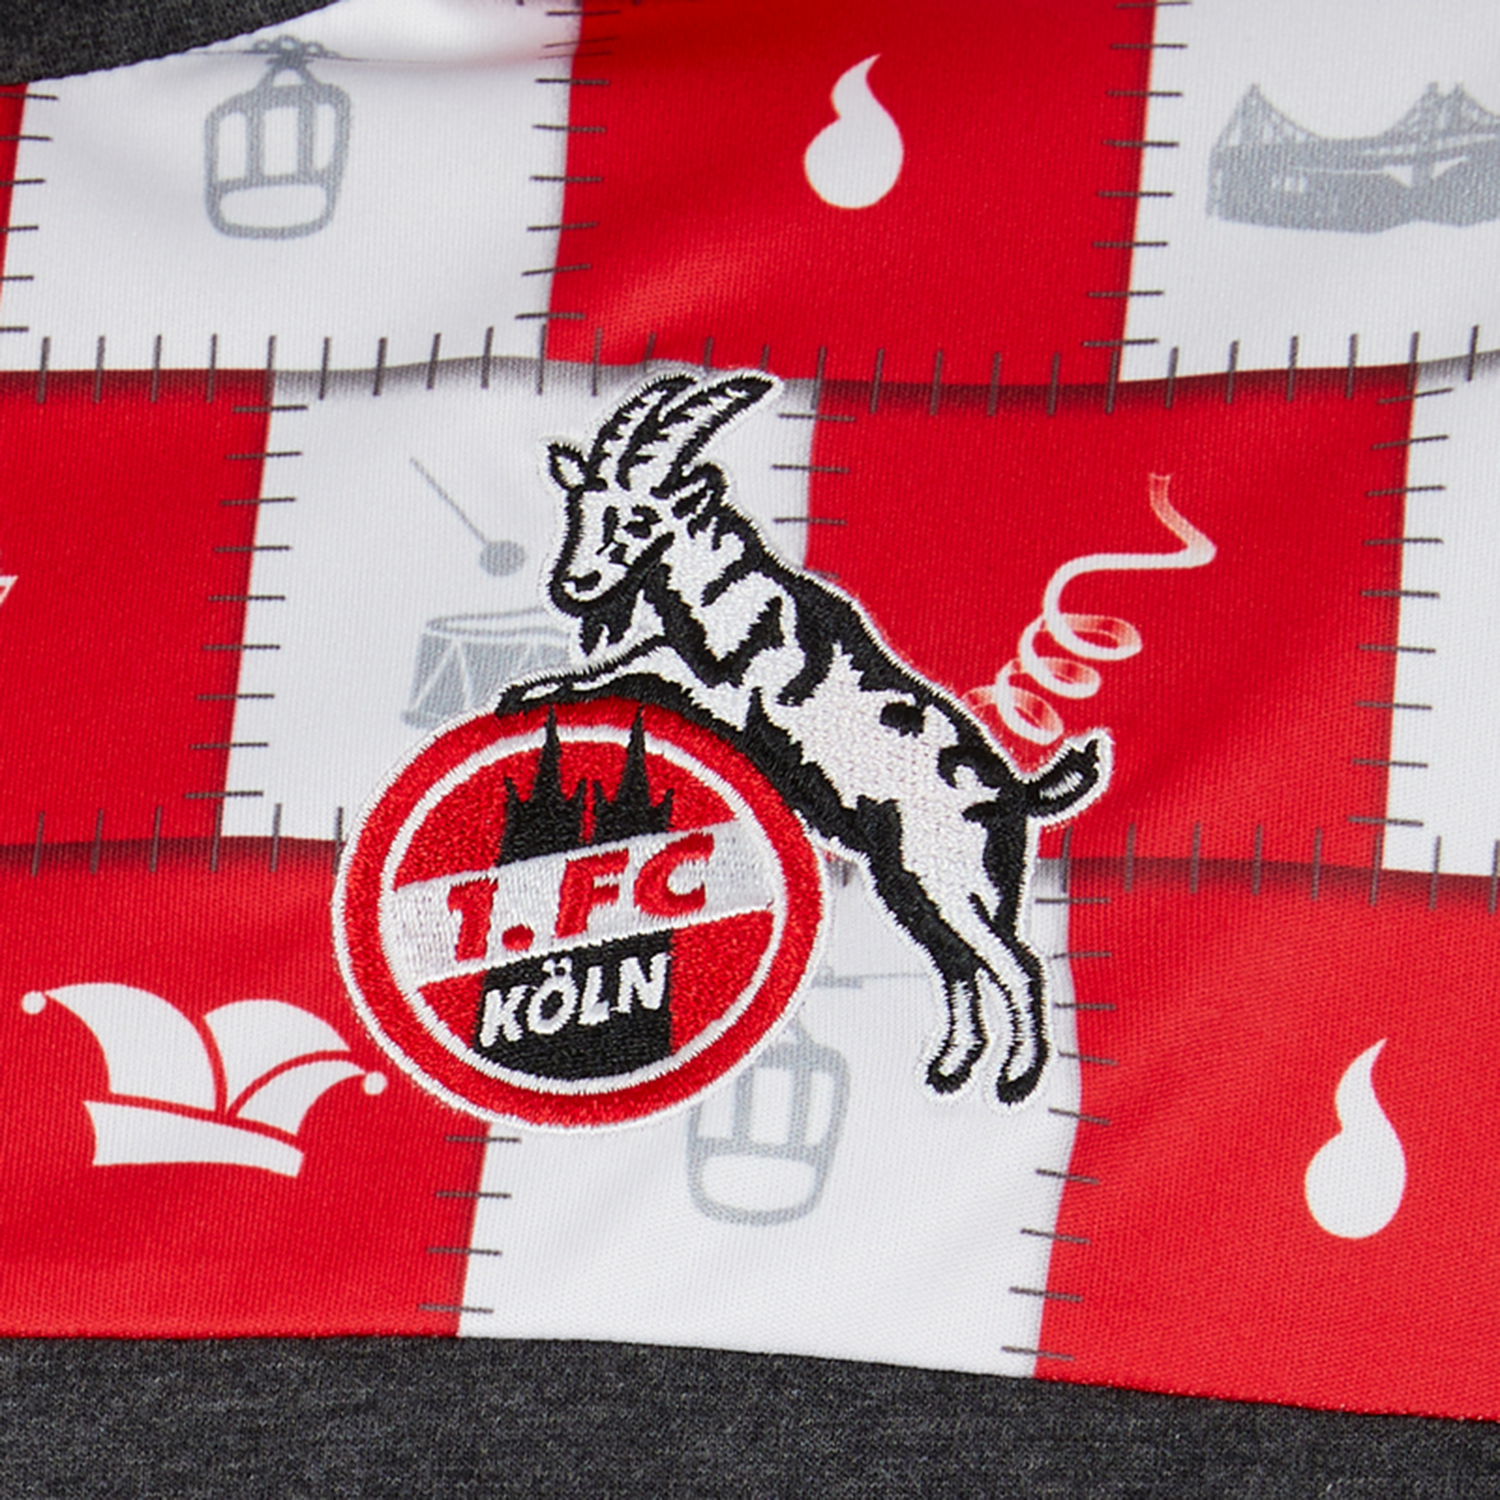 Uhlsport 1.FC Köln Karneval Tee 20/21 Herren Fastelovend Shirt 